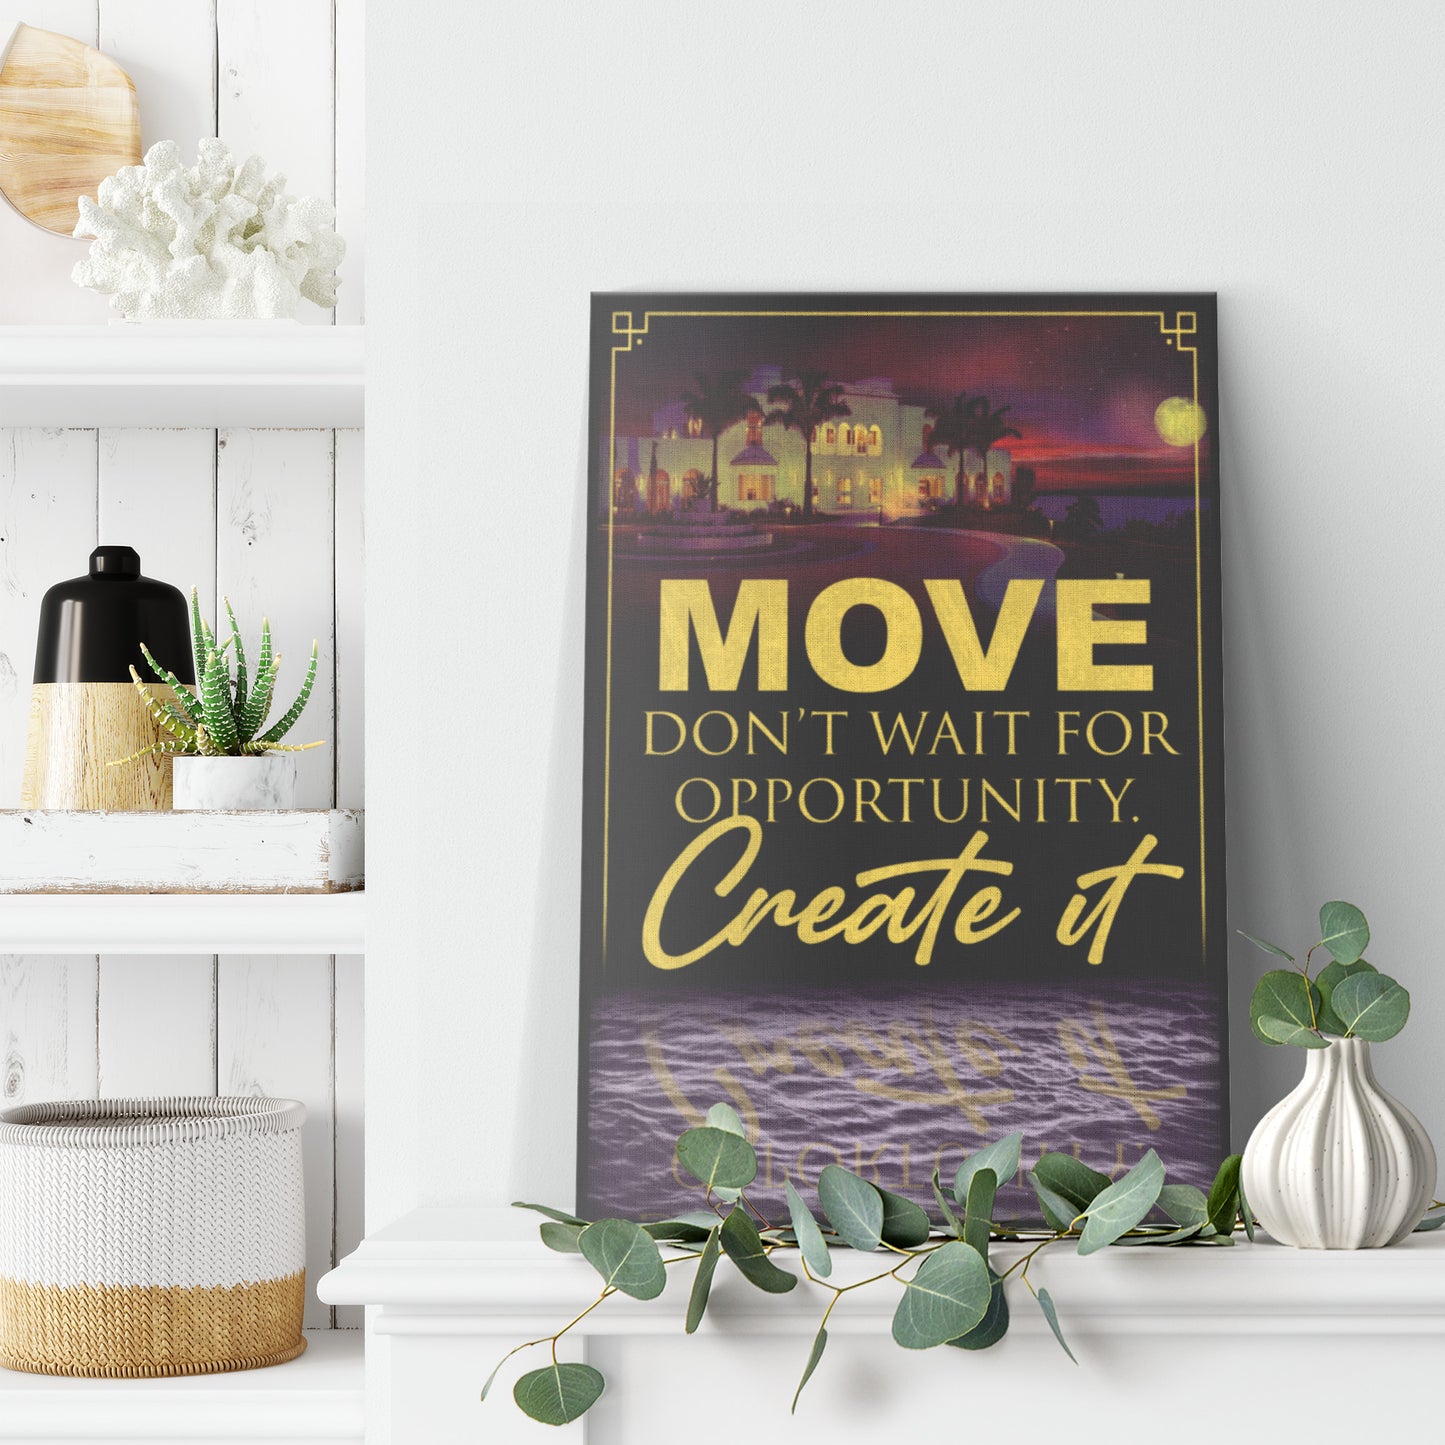 Move! Motivational Canvas Wall art